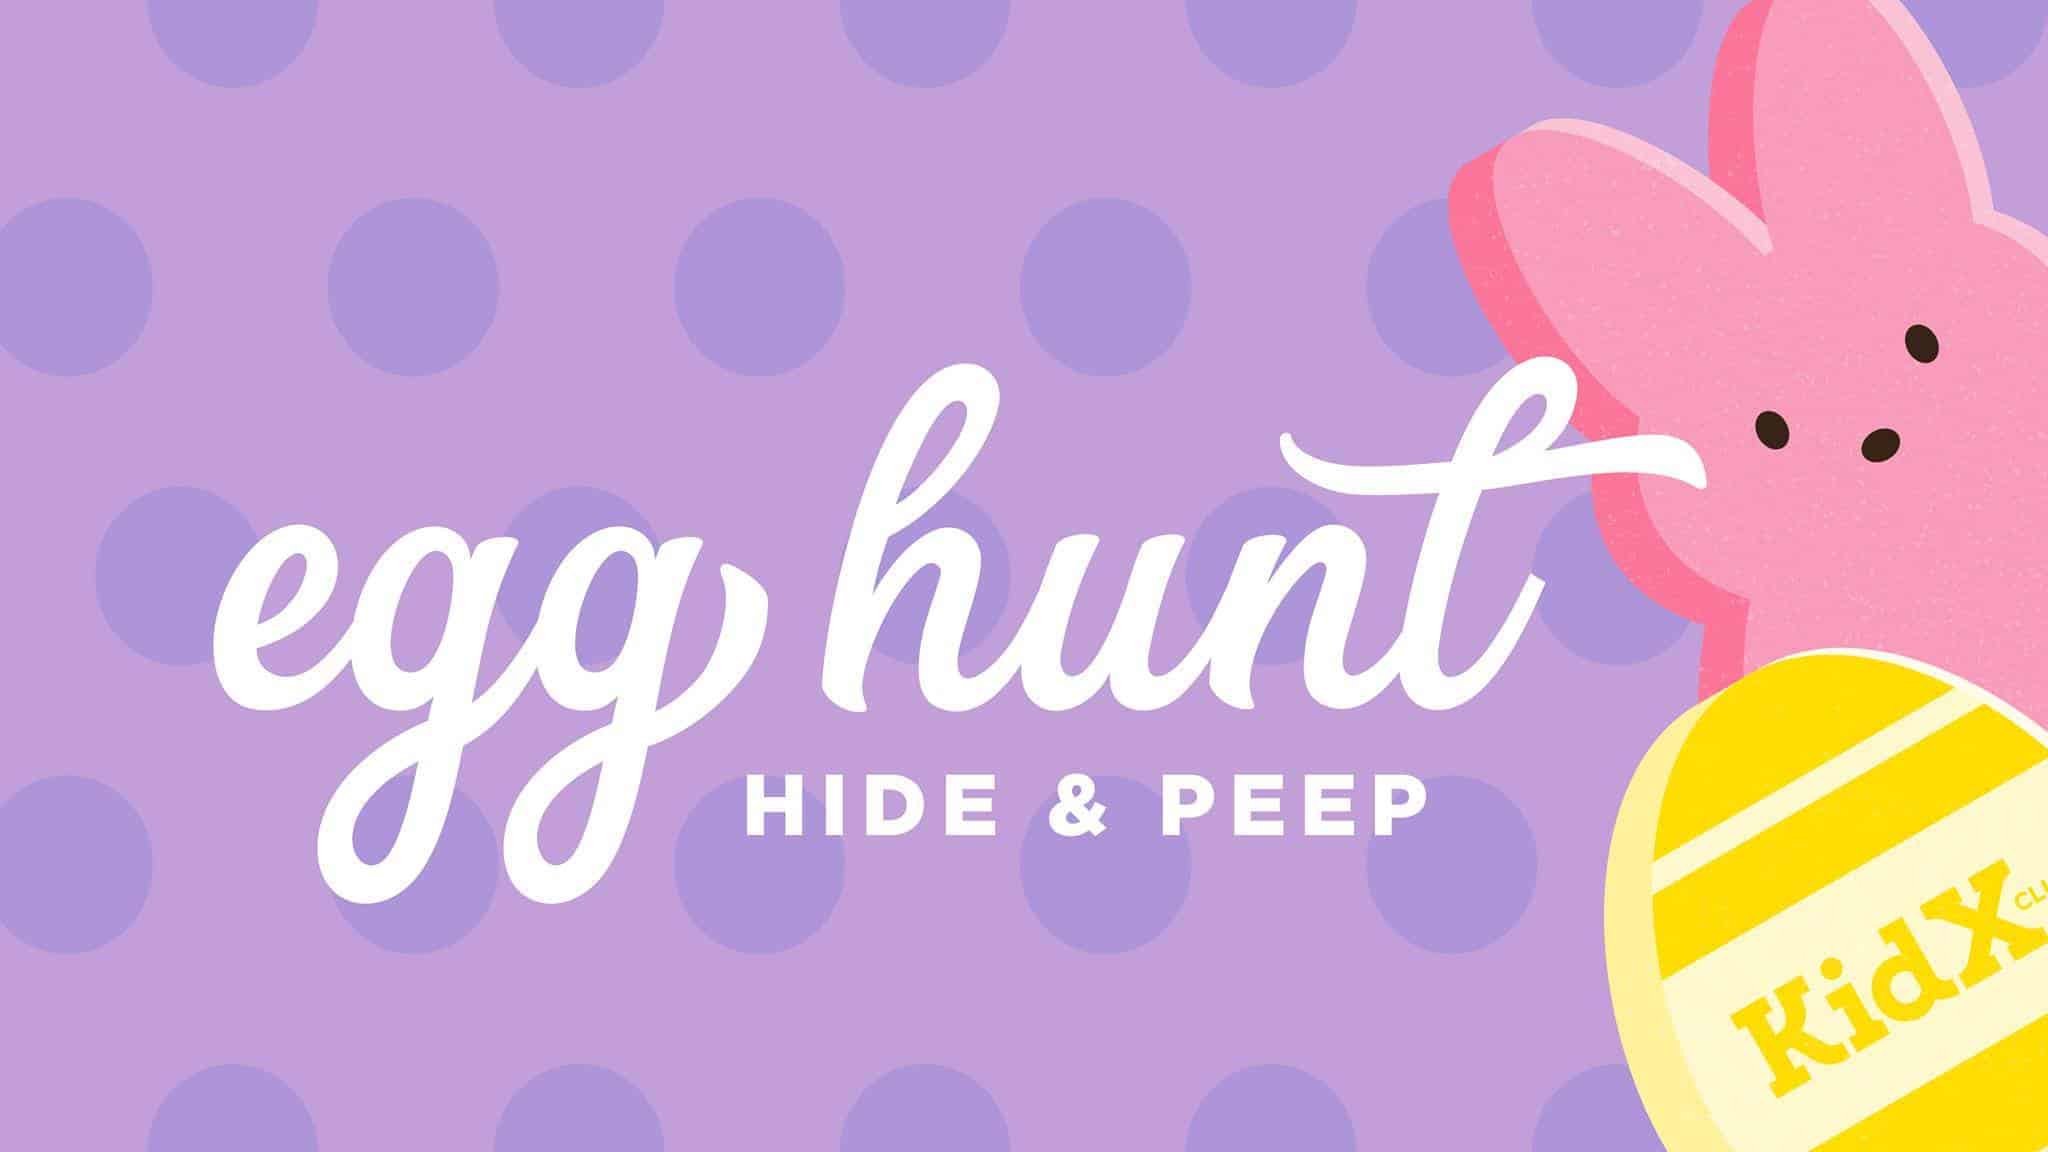 Boynton Beach Mall - Egg Hunt Hide and Peep